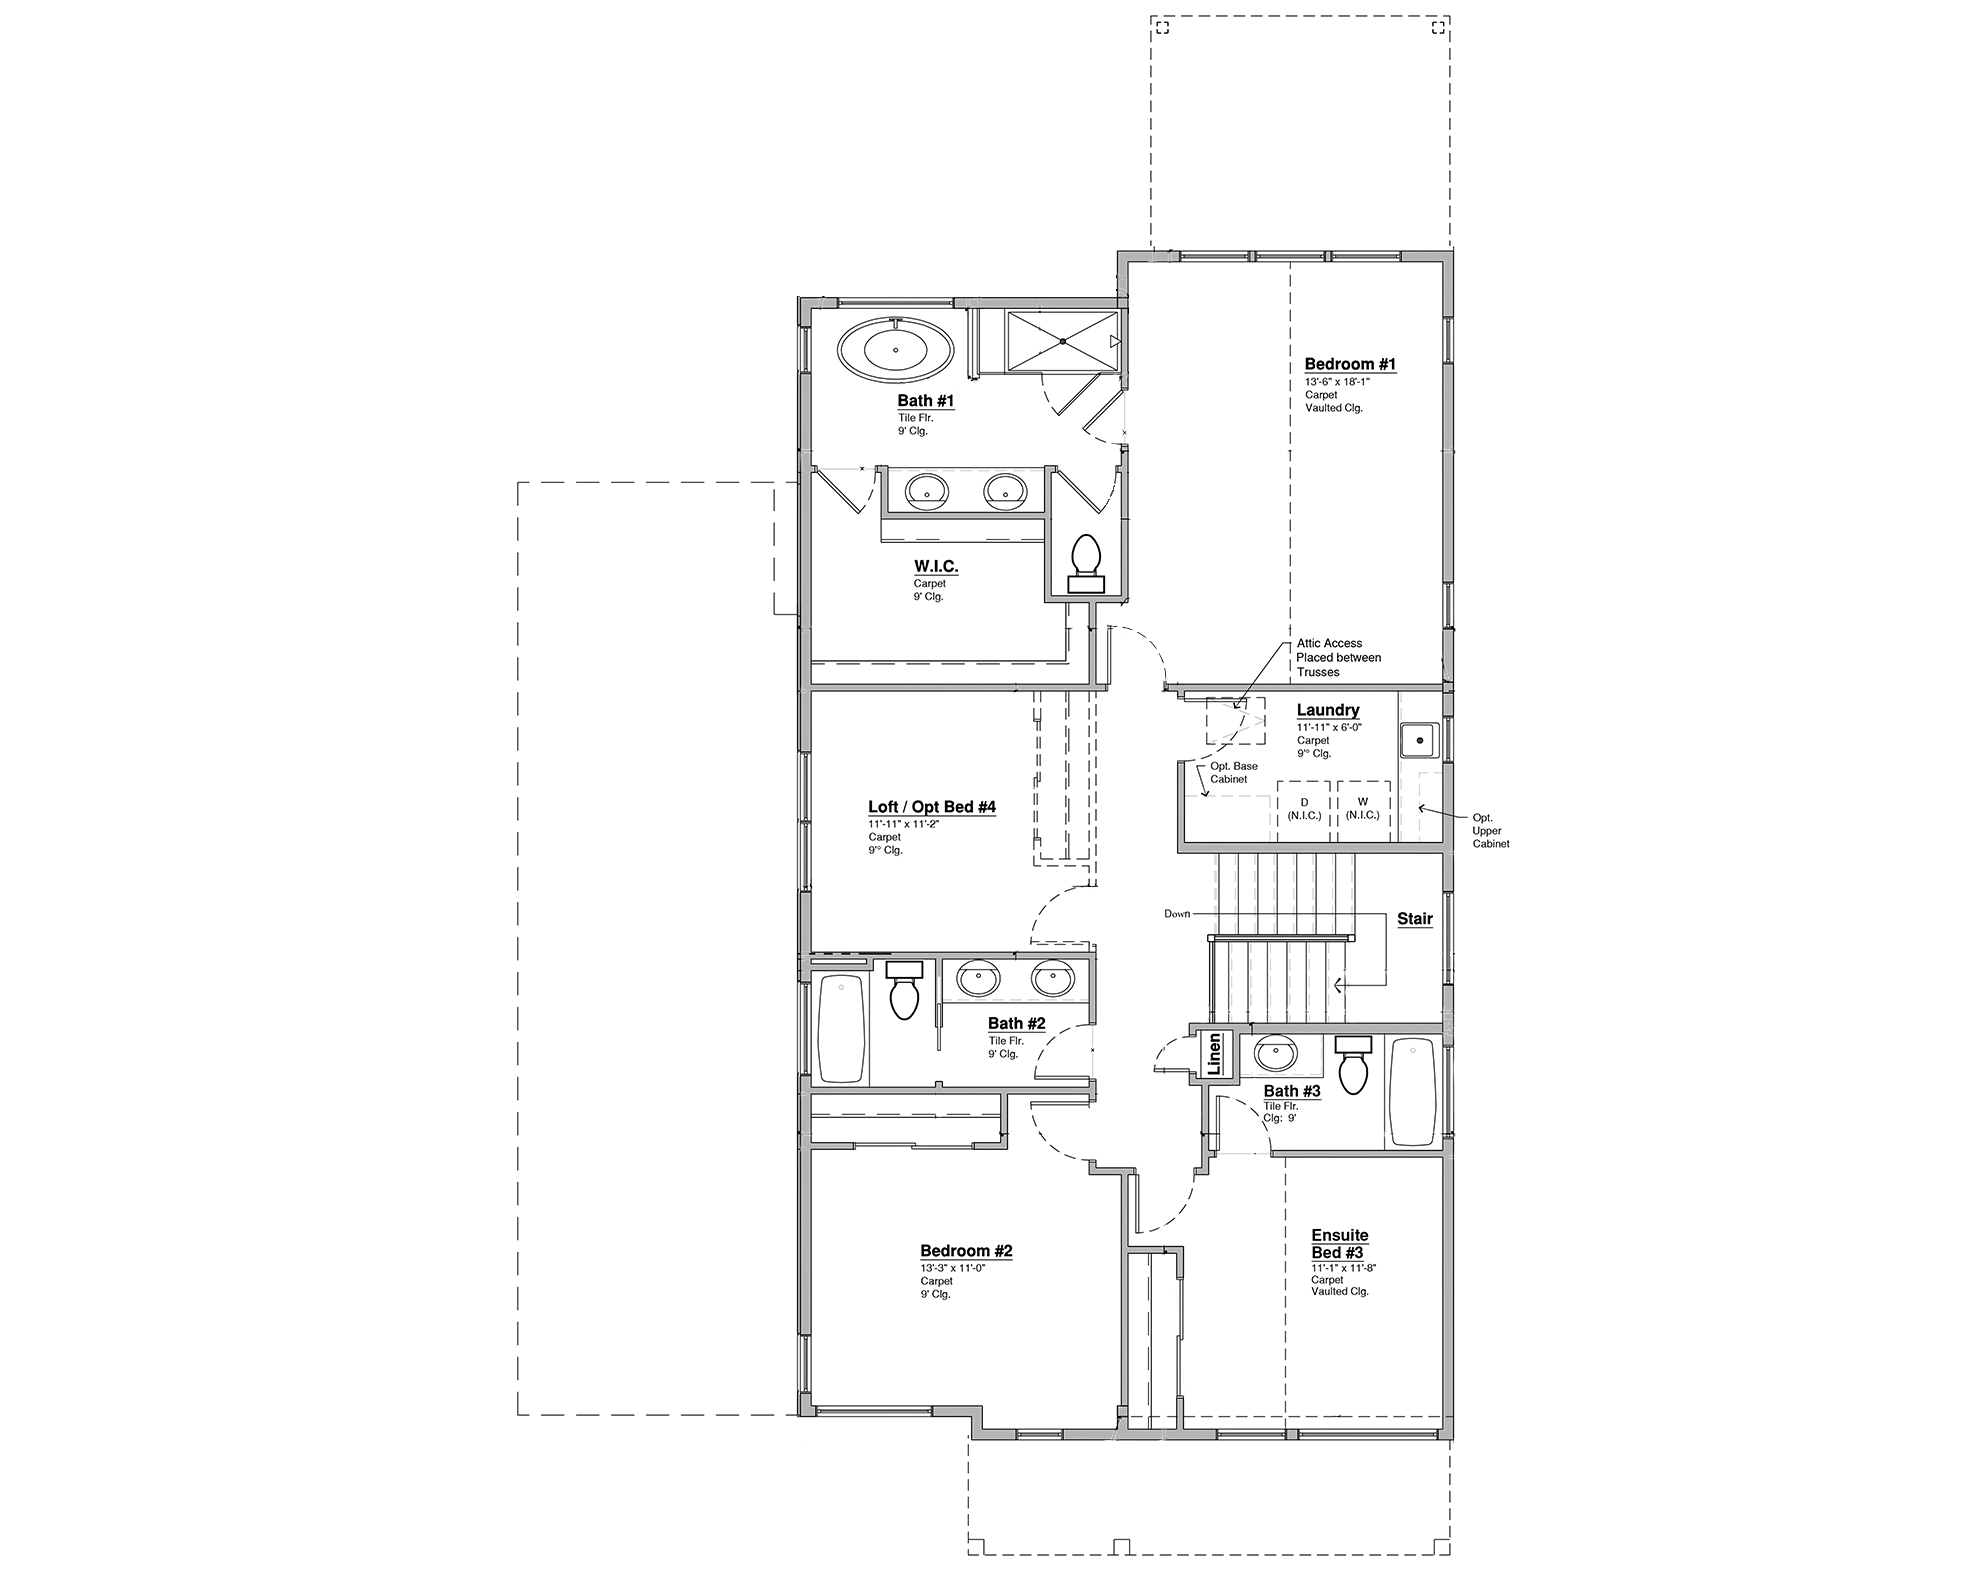 Semi-Custom upper level floor plan